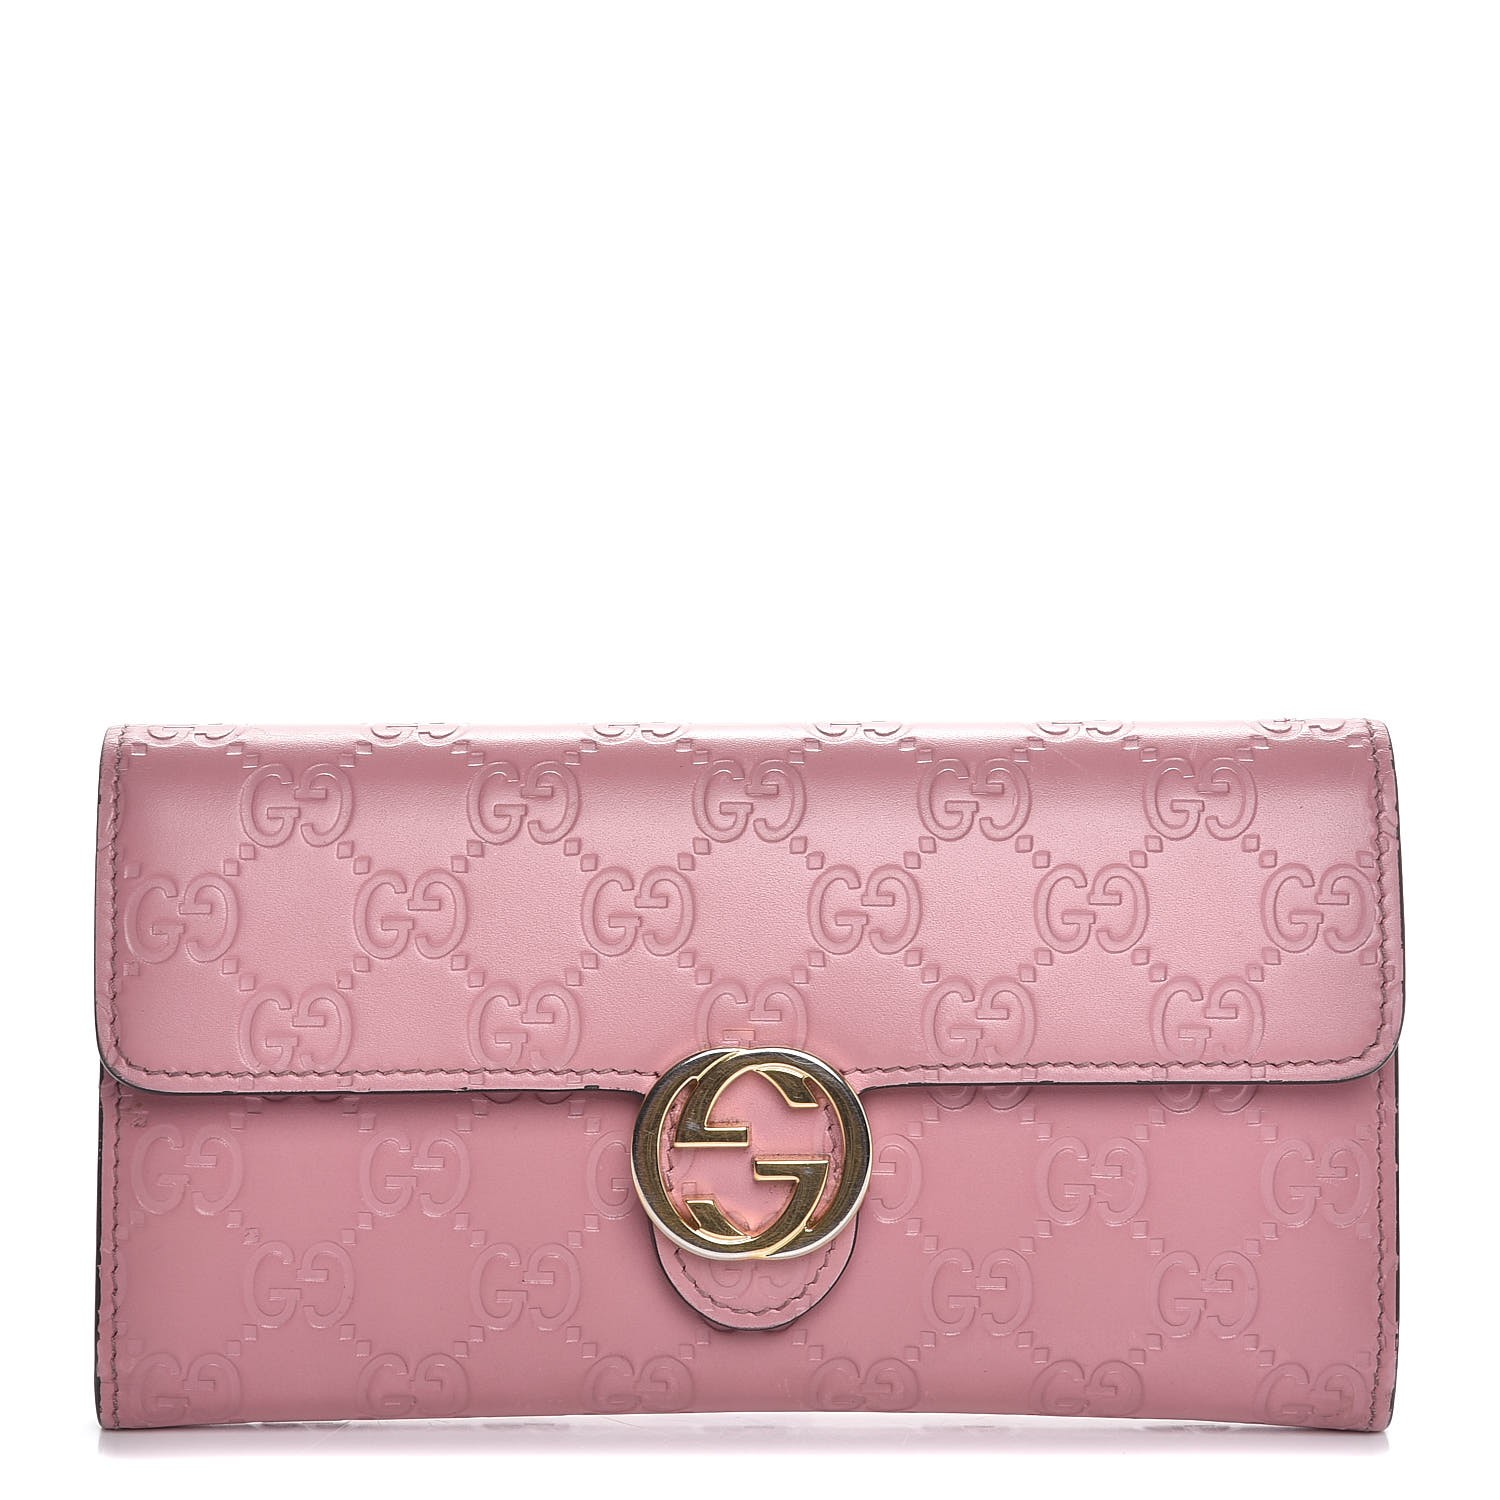 GUCCI Guccissima Icon Signature Wallet Light Pink 279911